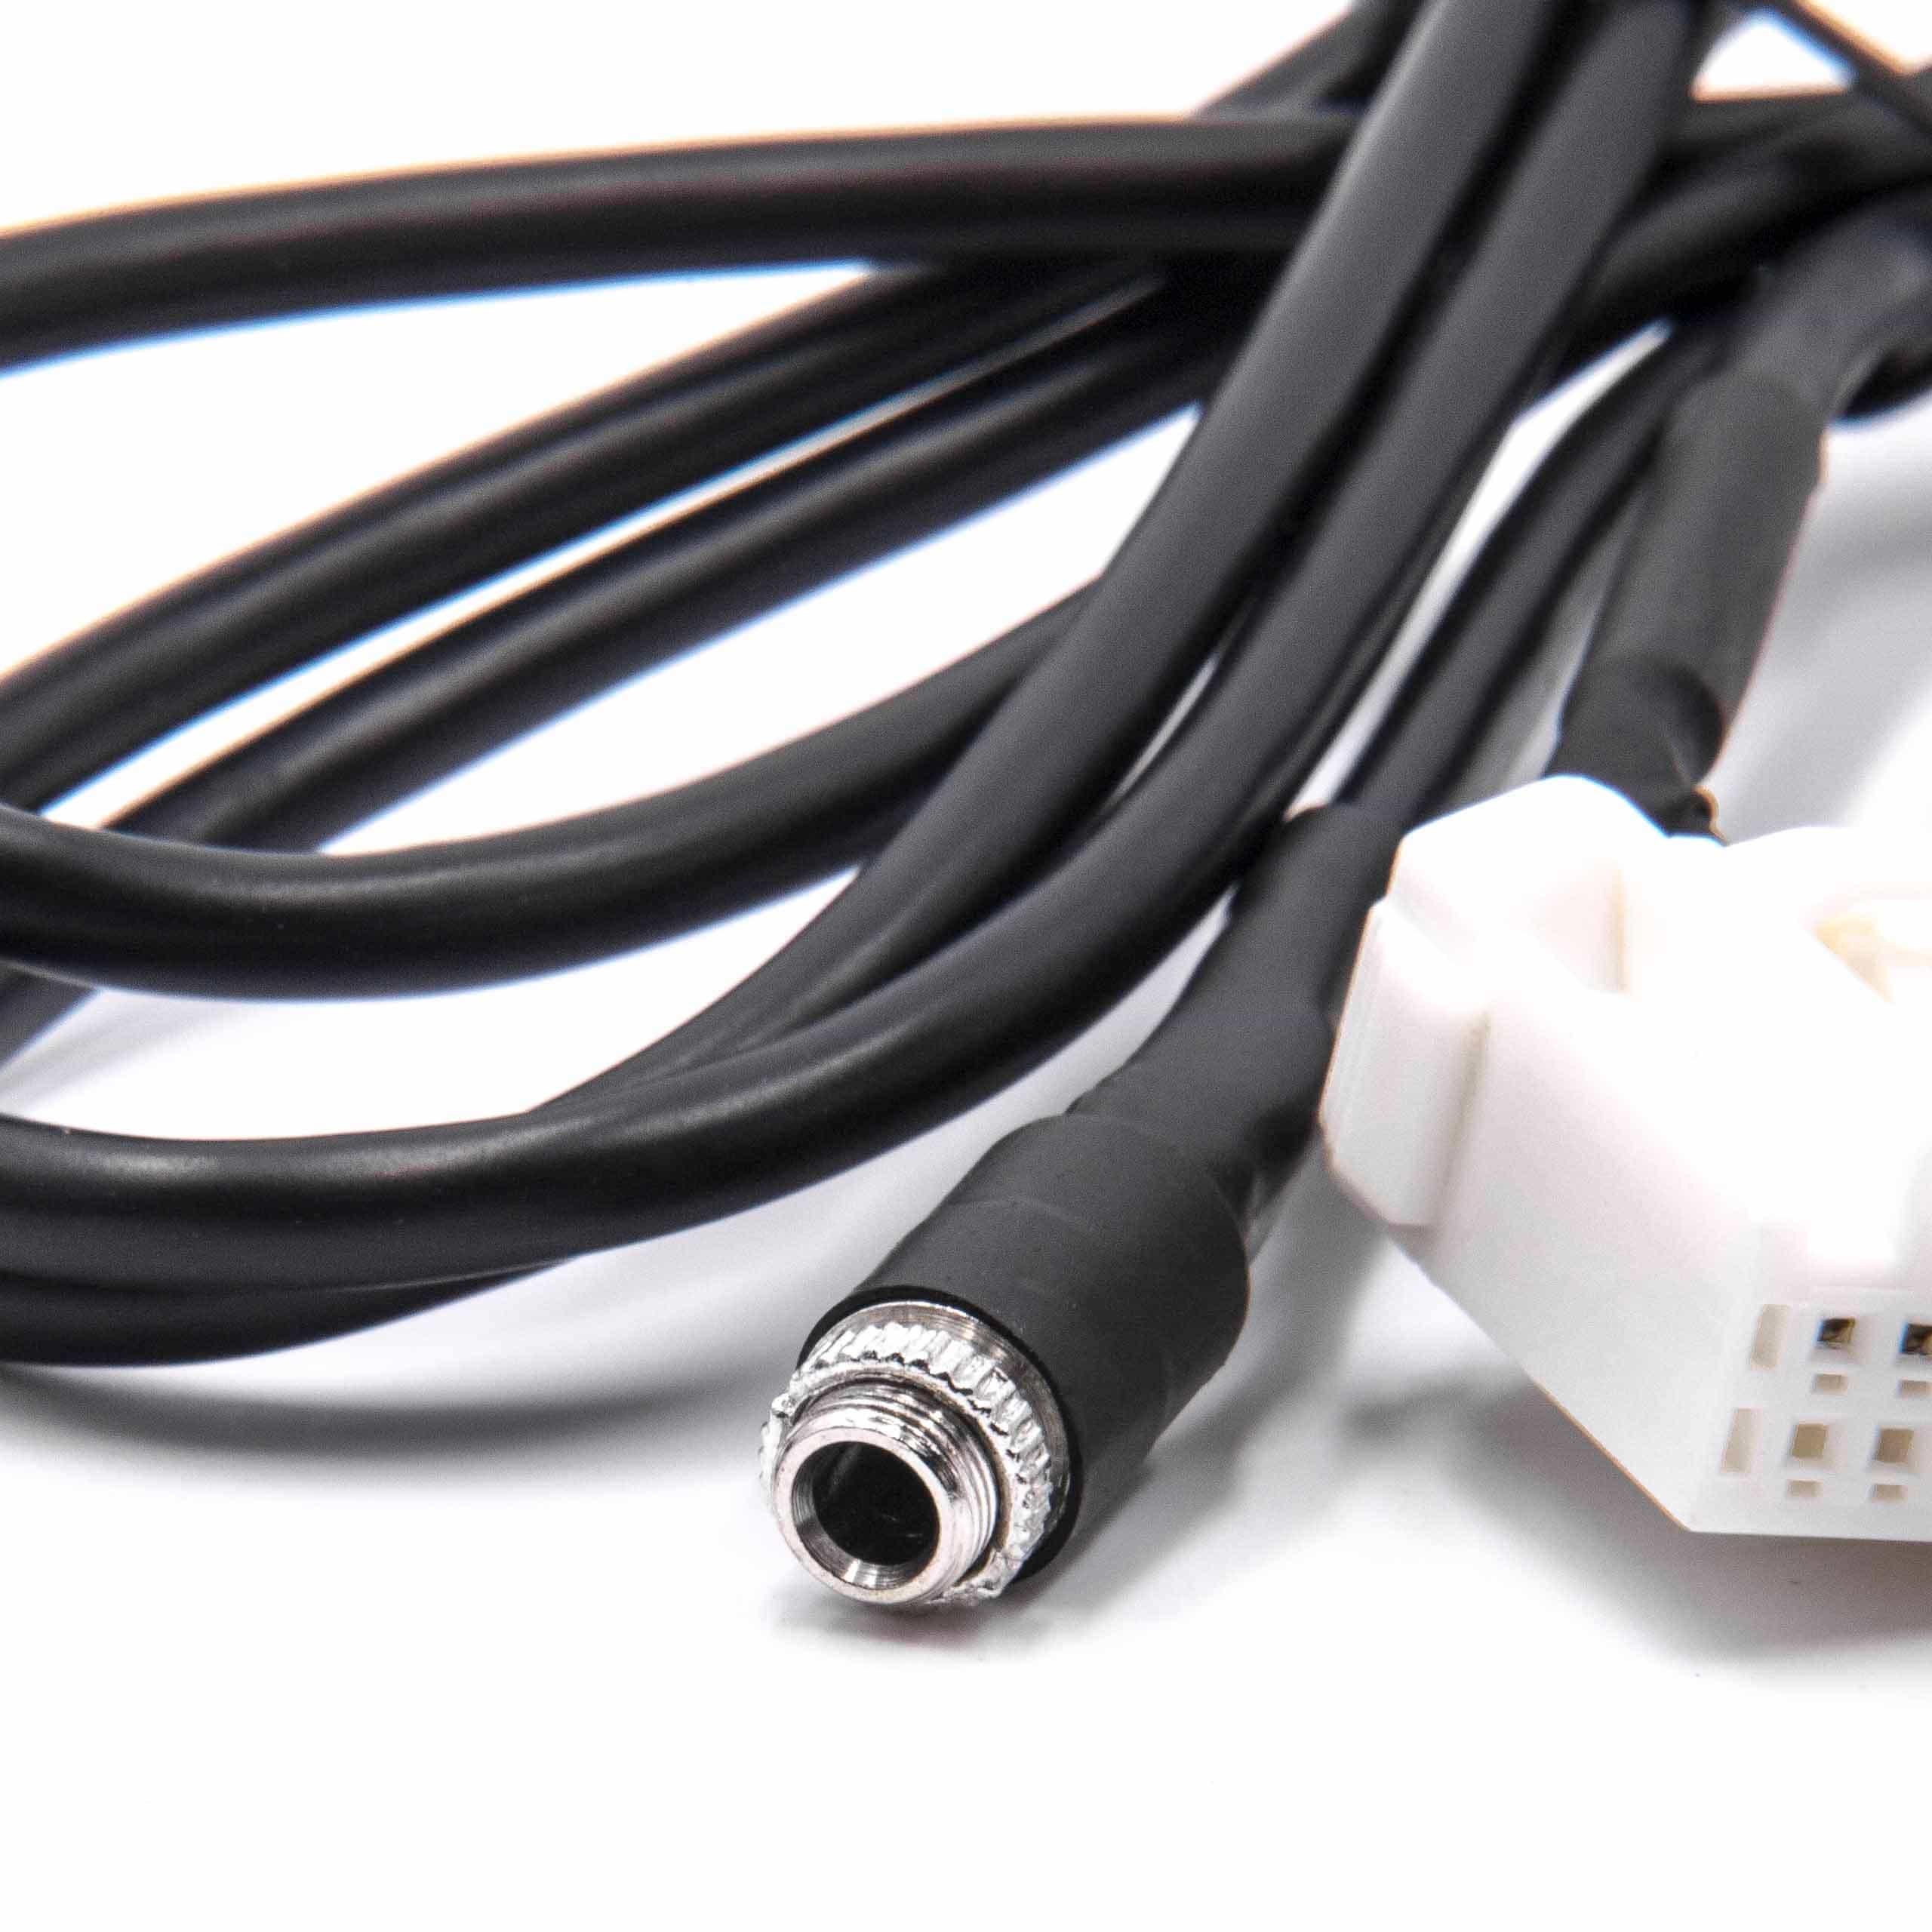 AUX Audio Adapter Cable for Besturn, Mazda B70 Car Radio etc.